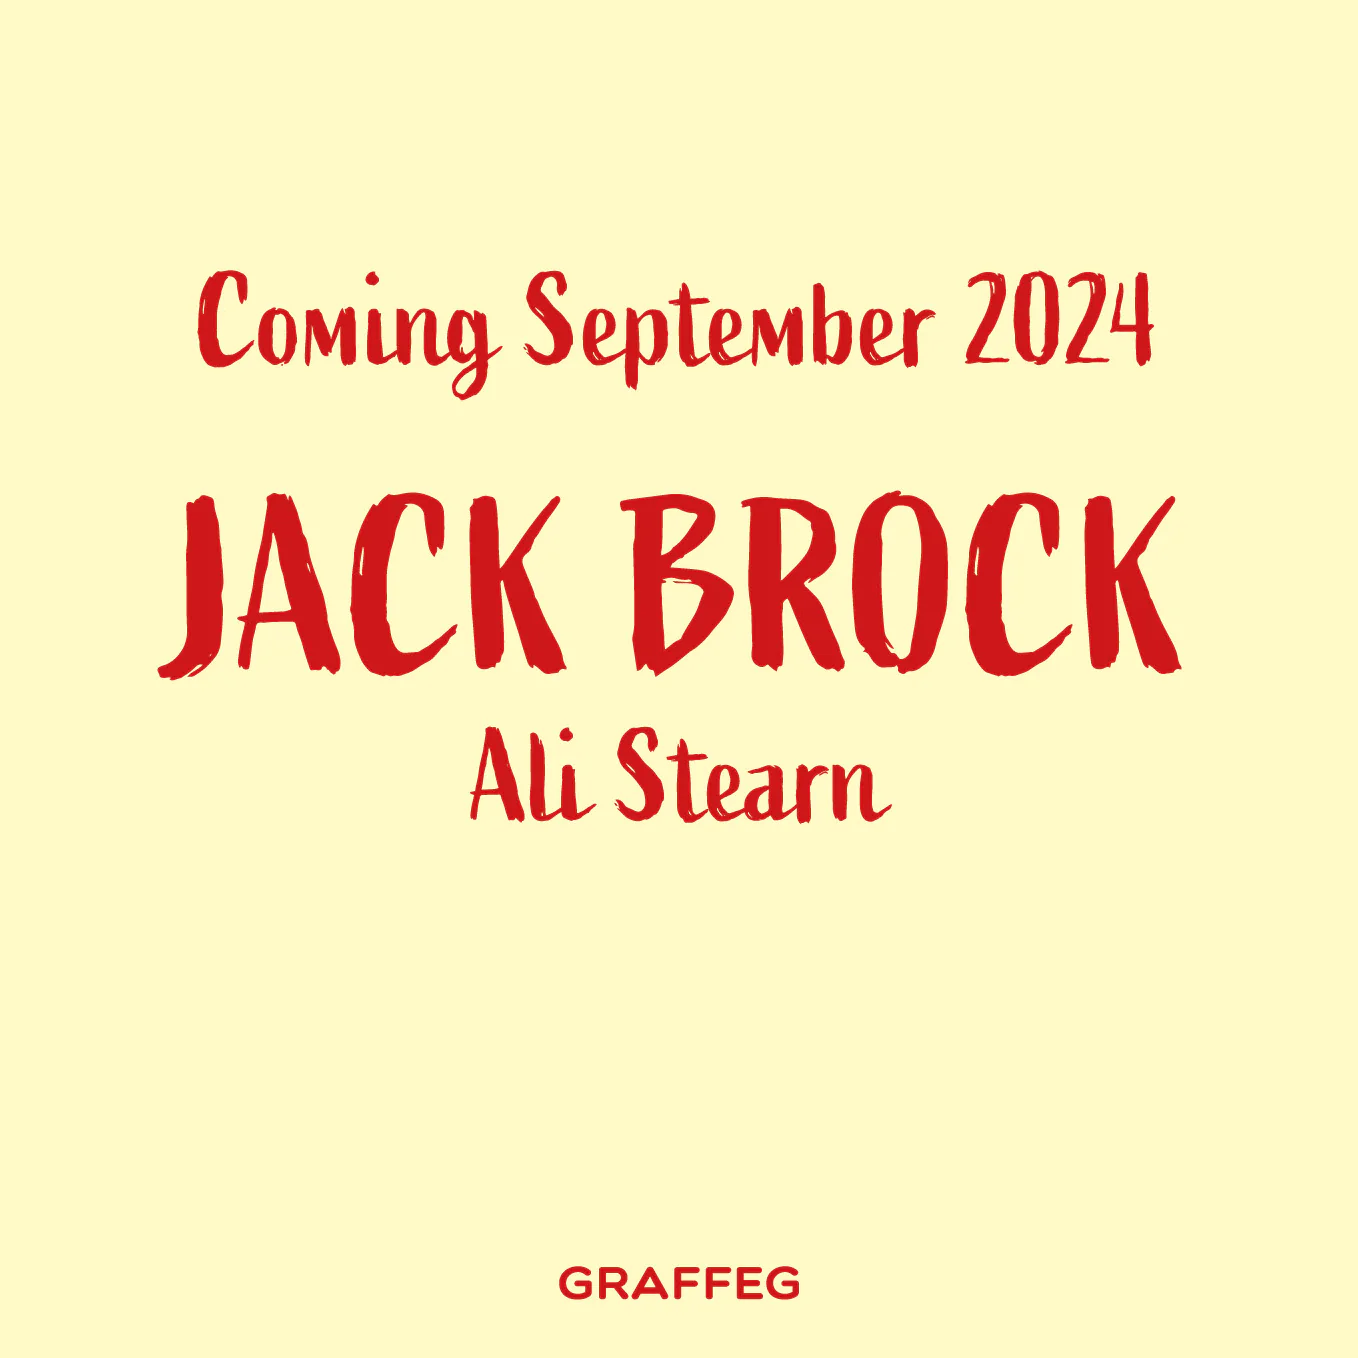 Jack Brock Book coming soon